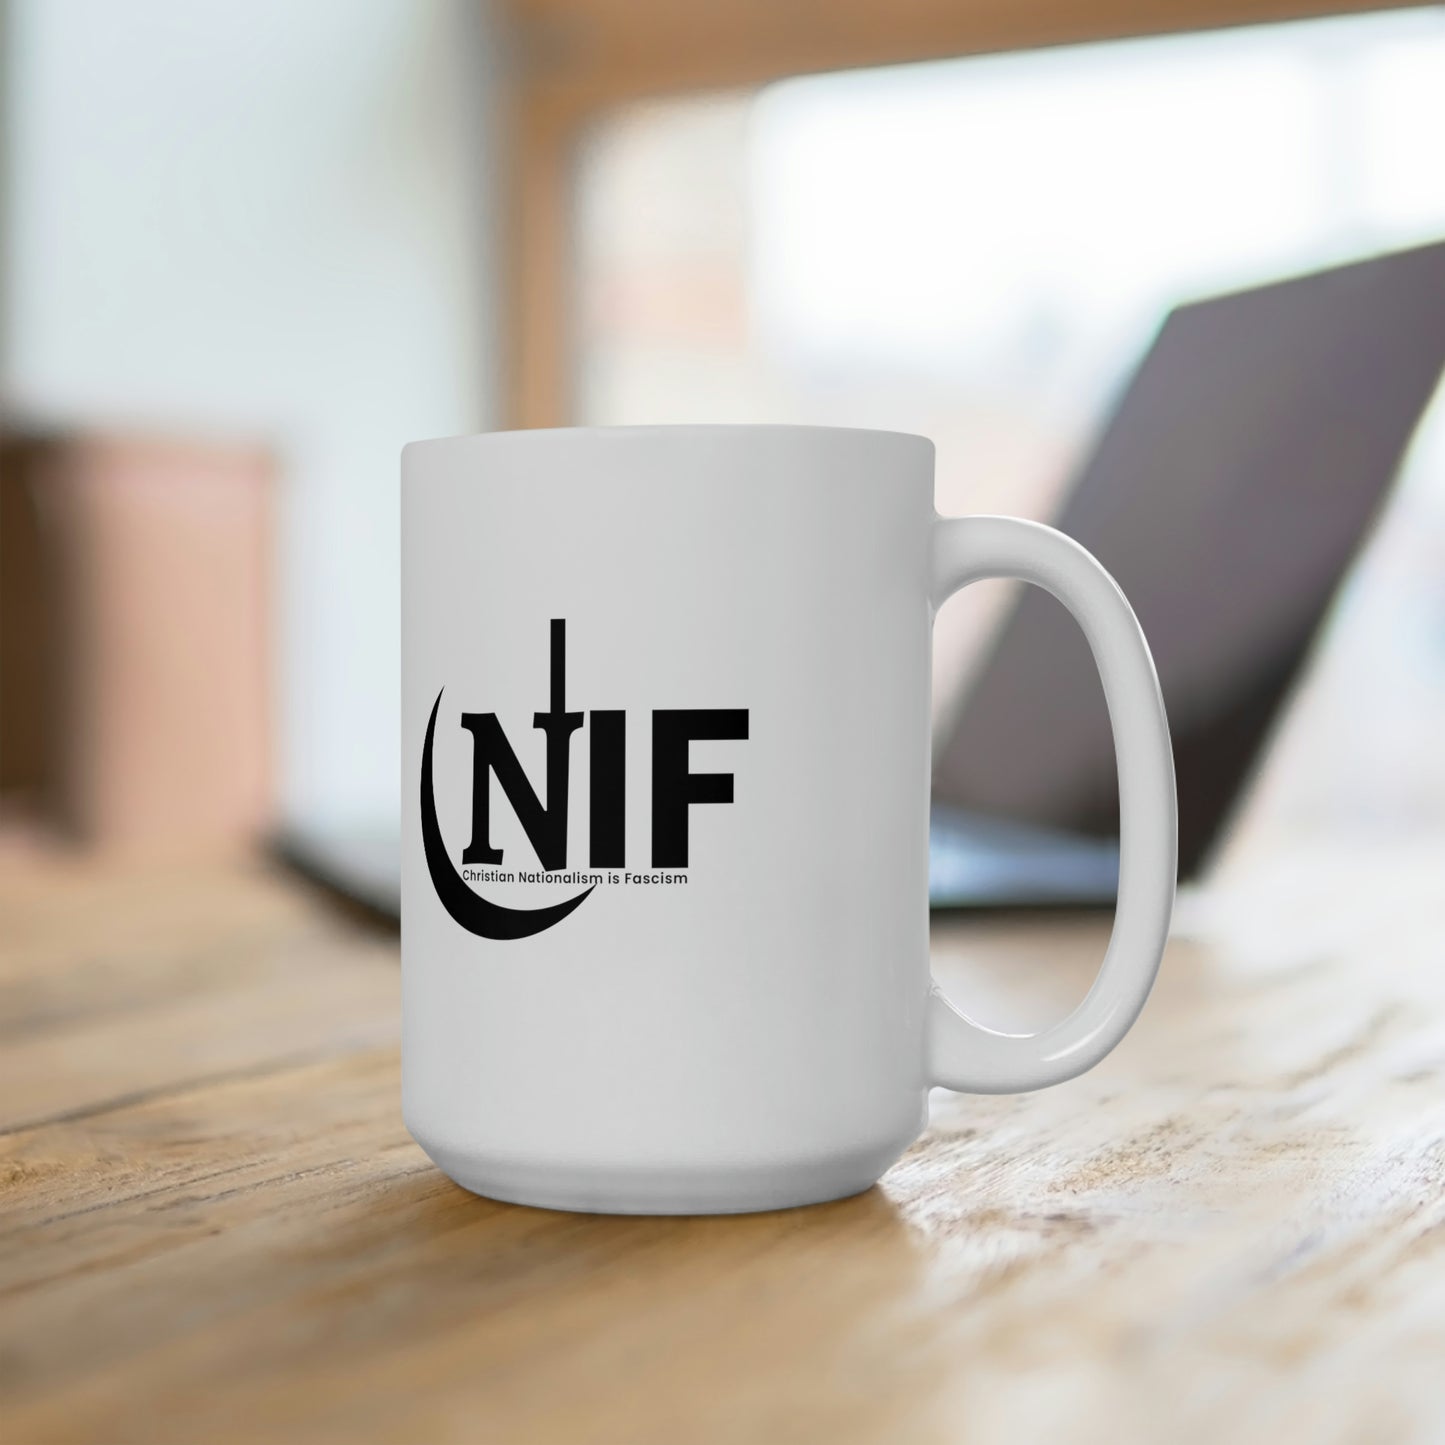 CNIF Christian Nationalism is Fascism White Ceramic Mug 15oz